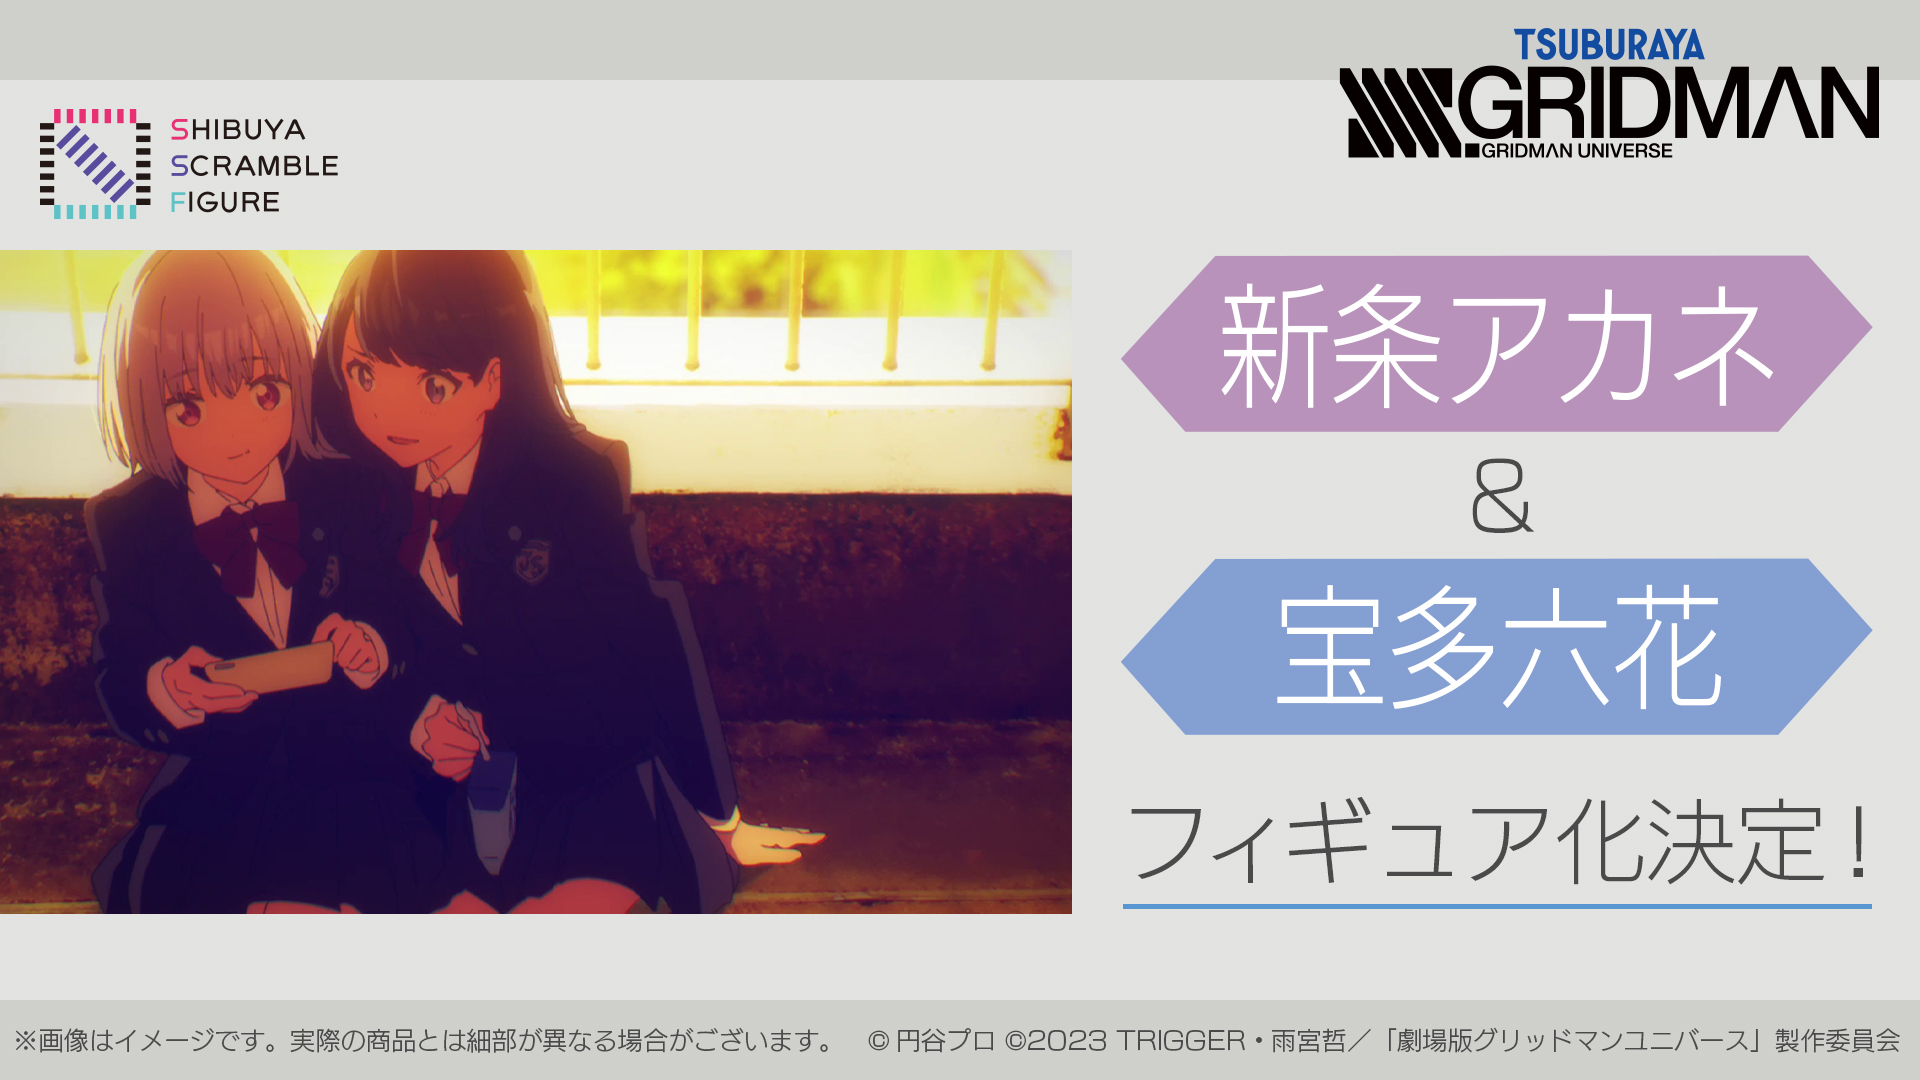 SHIBUYA SCRAMBLE FIGURE、TVアニメ『SSSS.GRIDMAN』より「新条アカネ